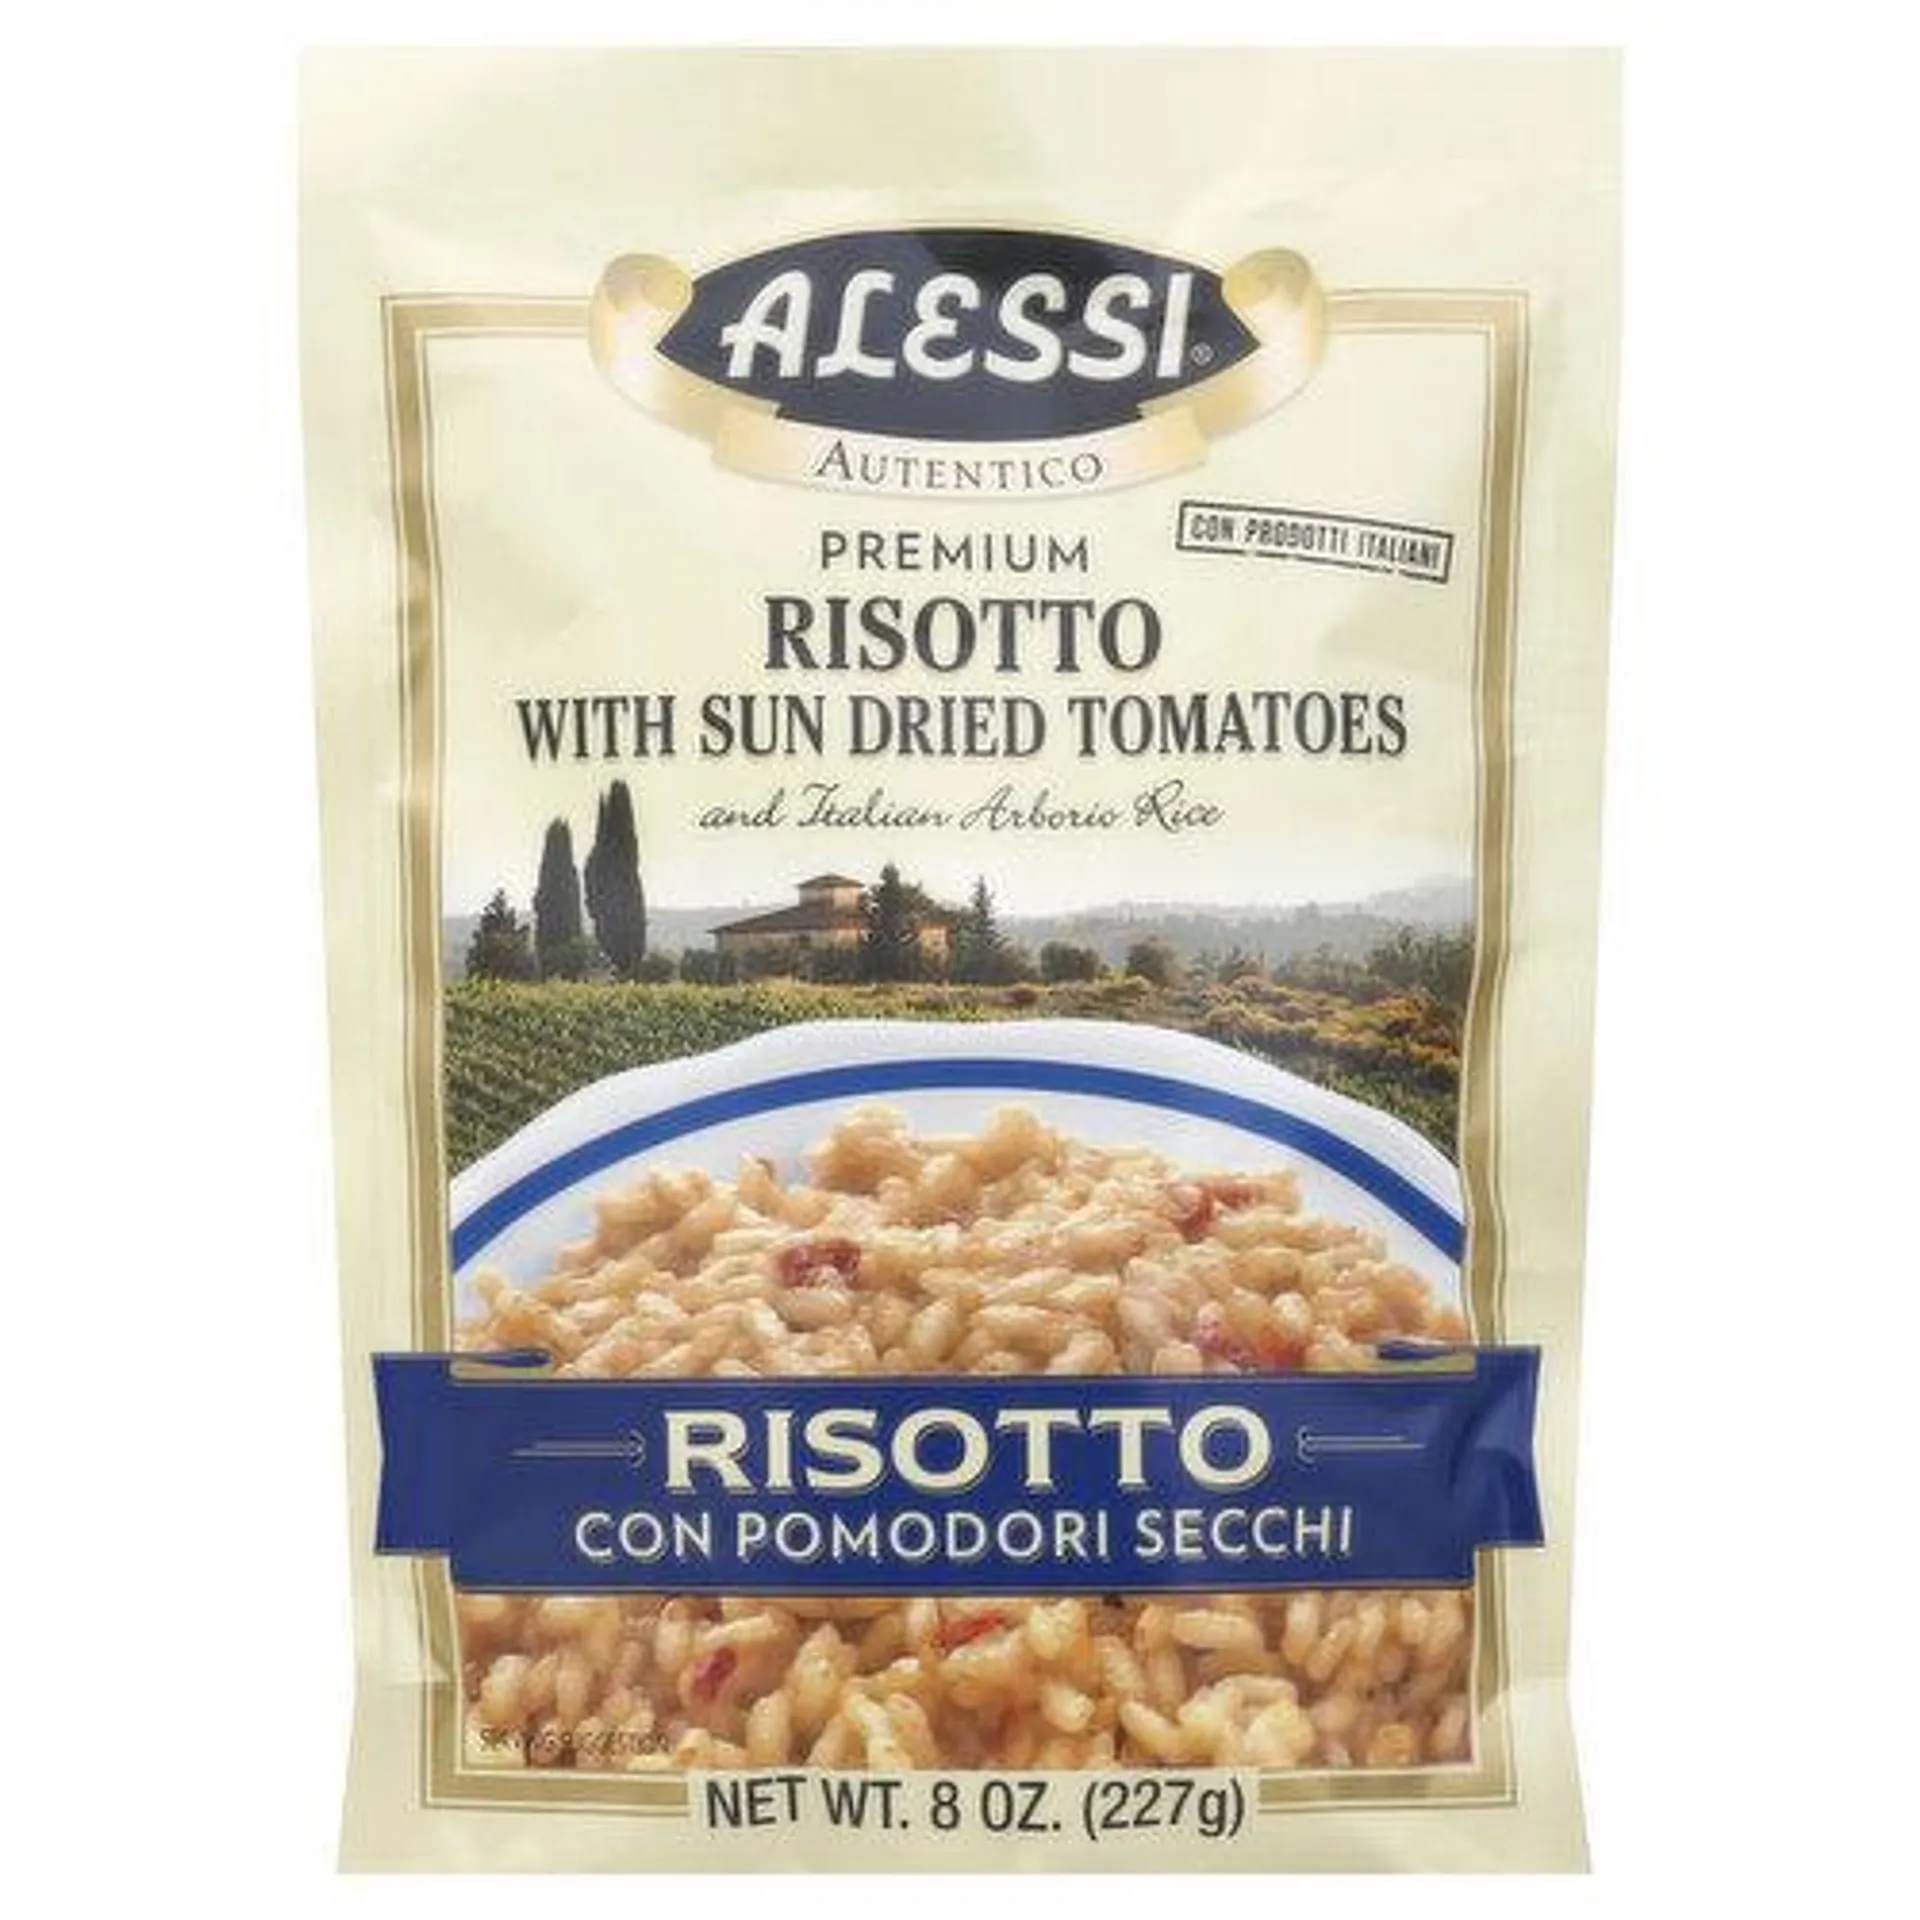 Alessi Risotto, Premium, with Sun Dried Tomatoes and Italian Arborio Rice - 8 Ounce